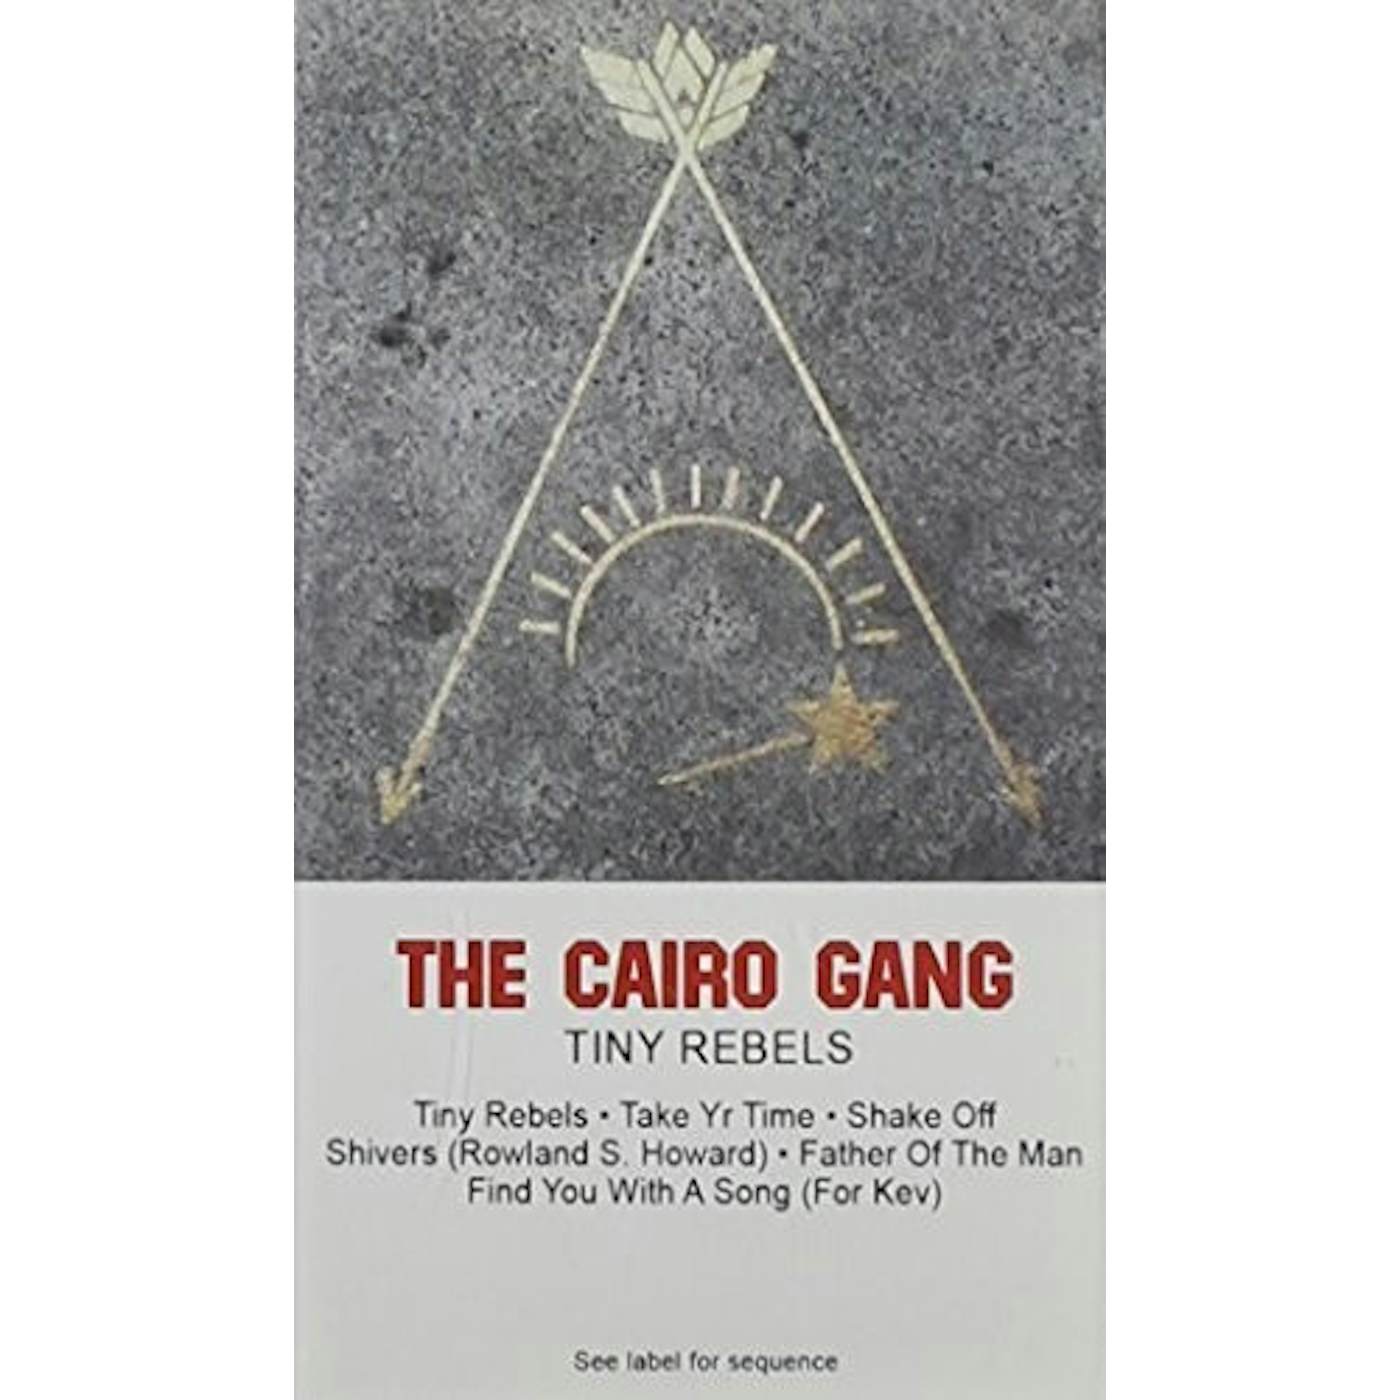 The Cairo Gang TINY REBELS CD